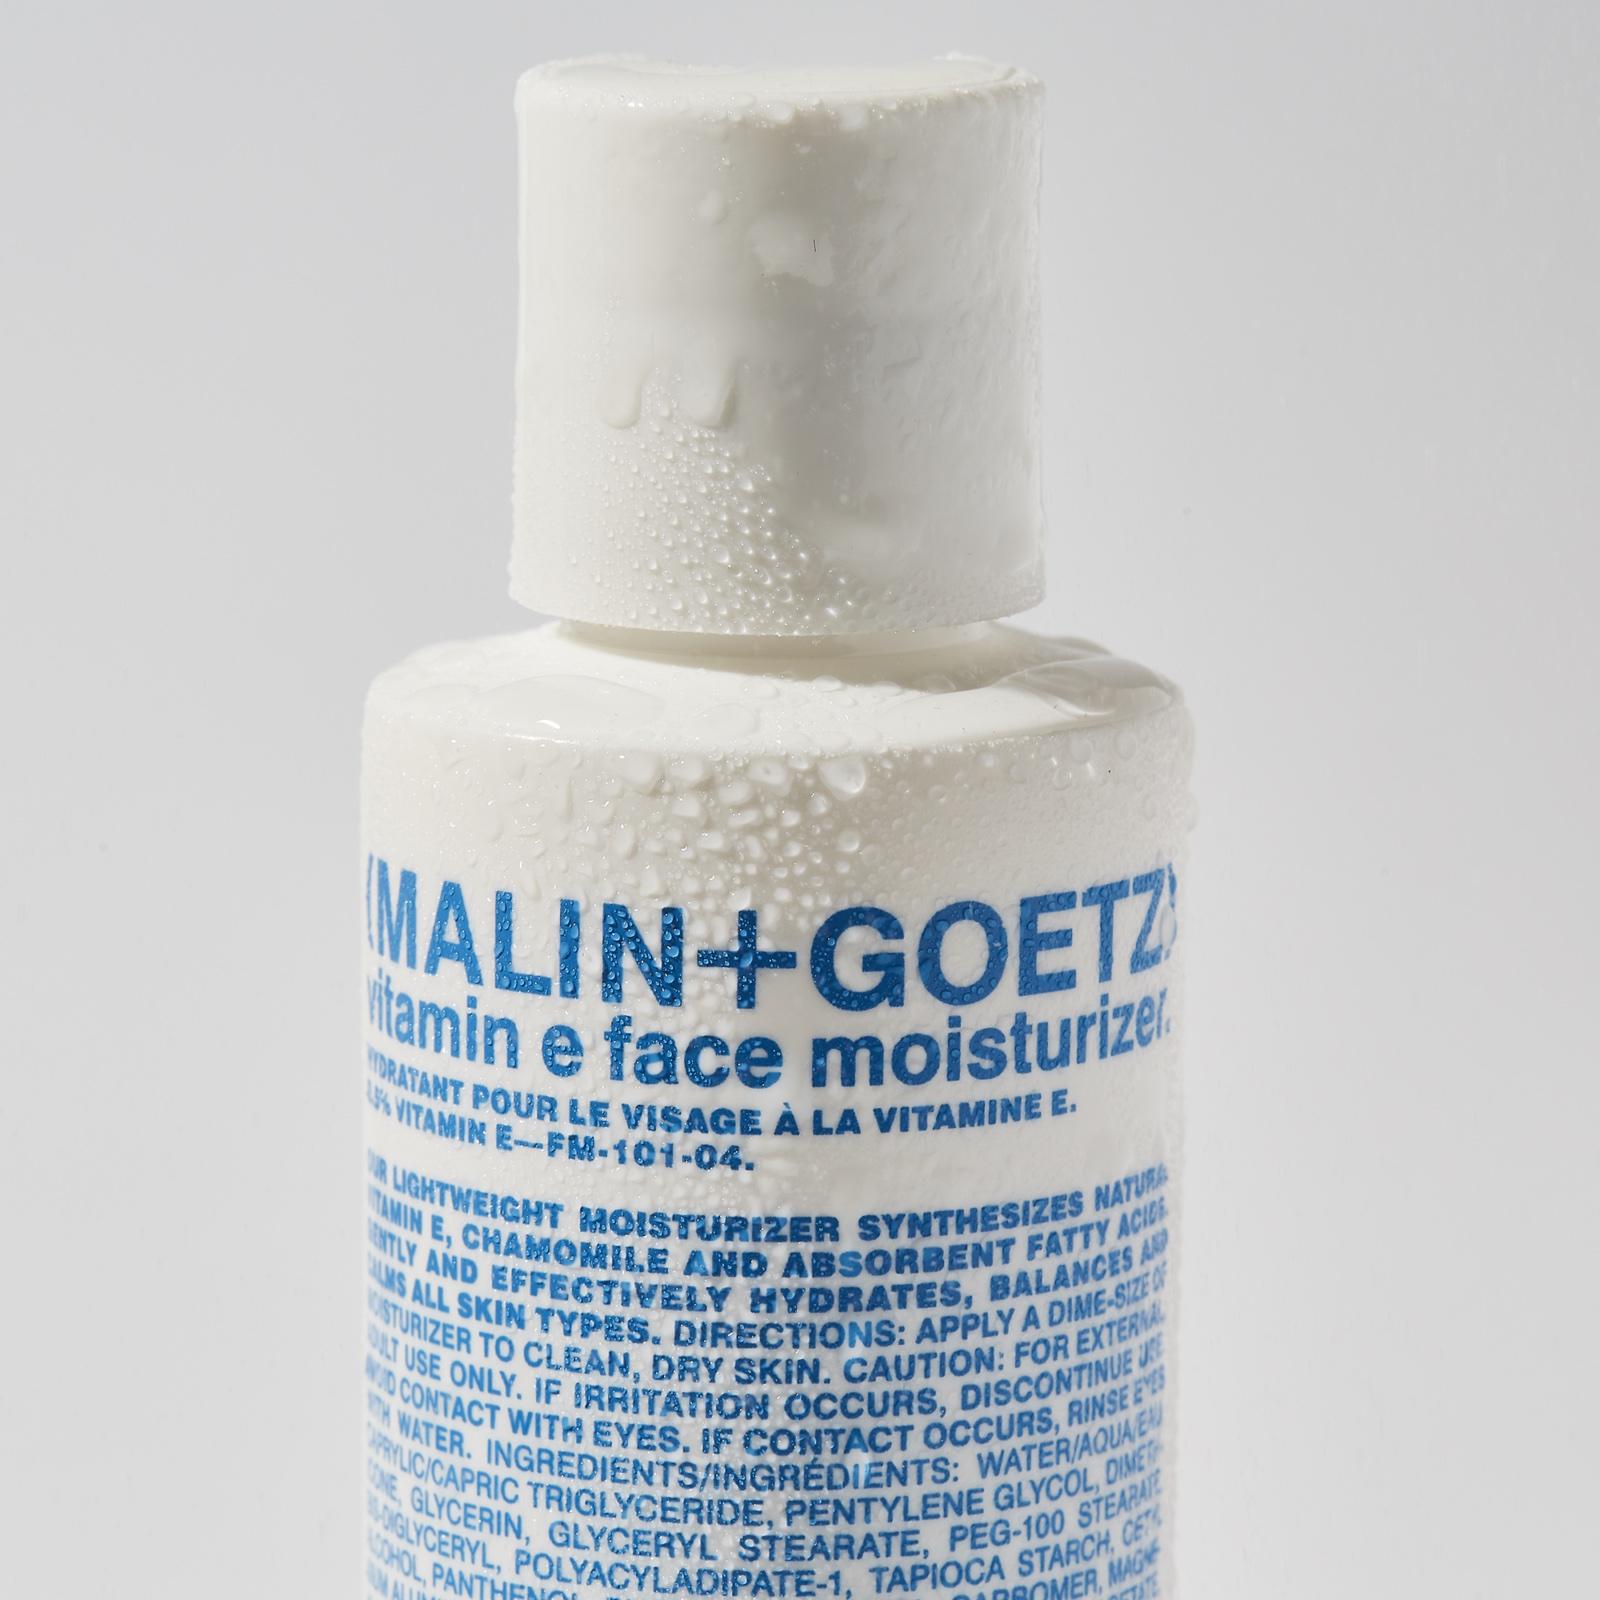 Malin + Goetz - vitamin e face moisturizer | Perfume Lounge